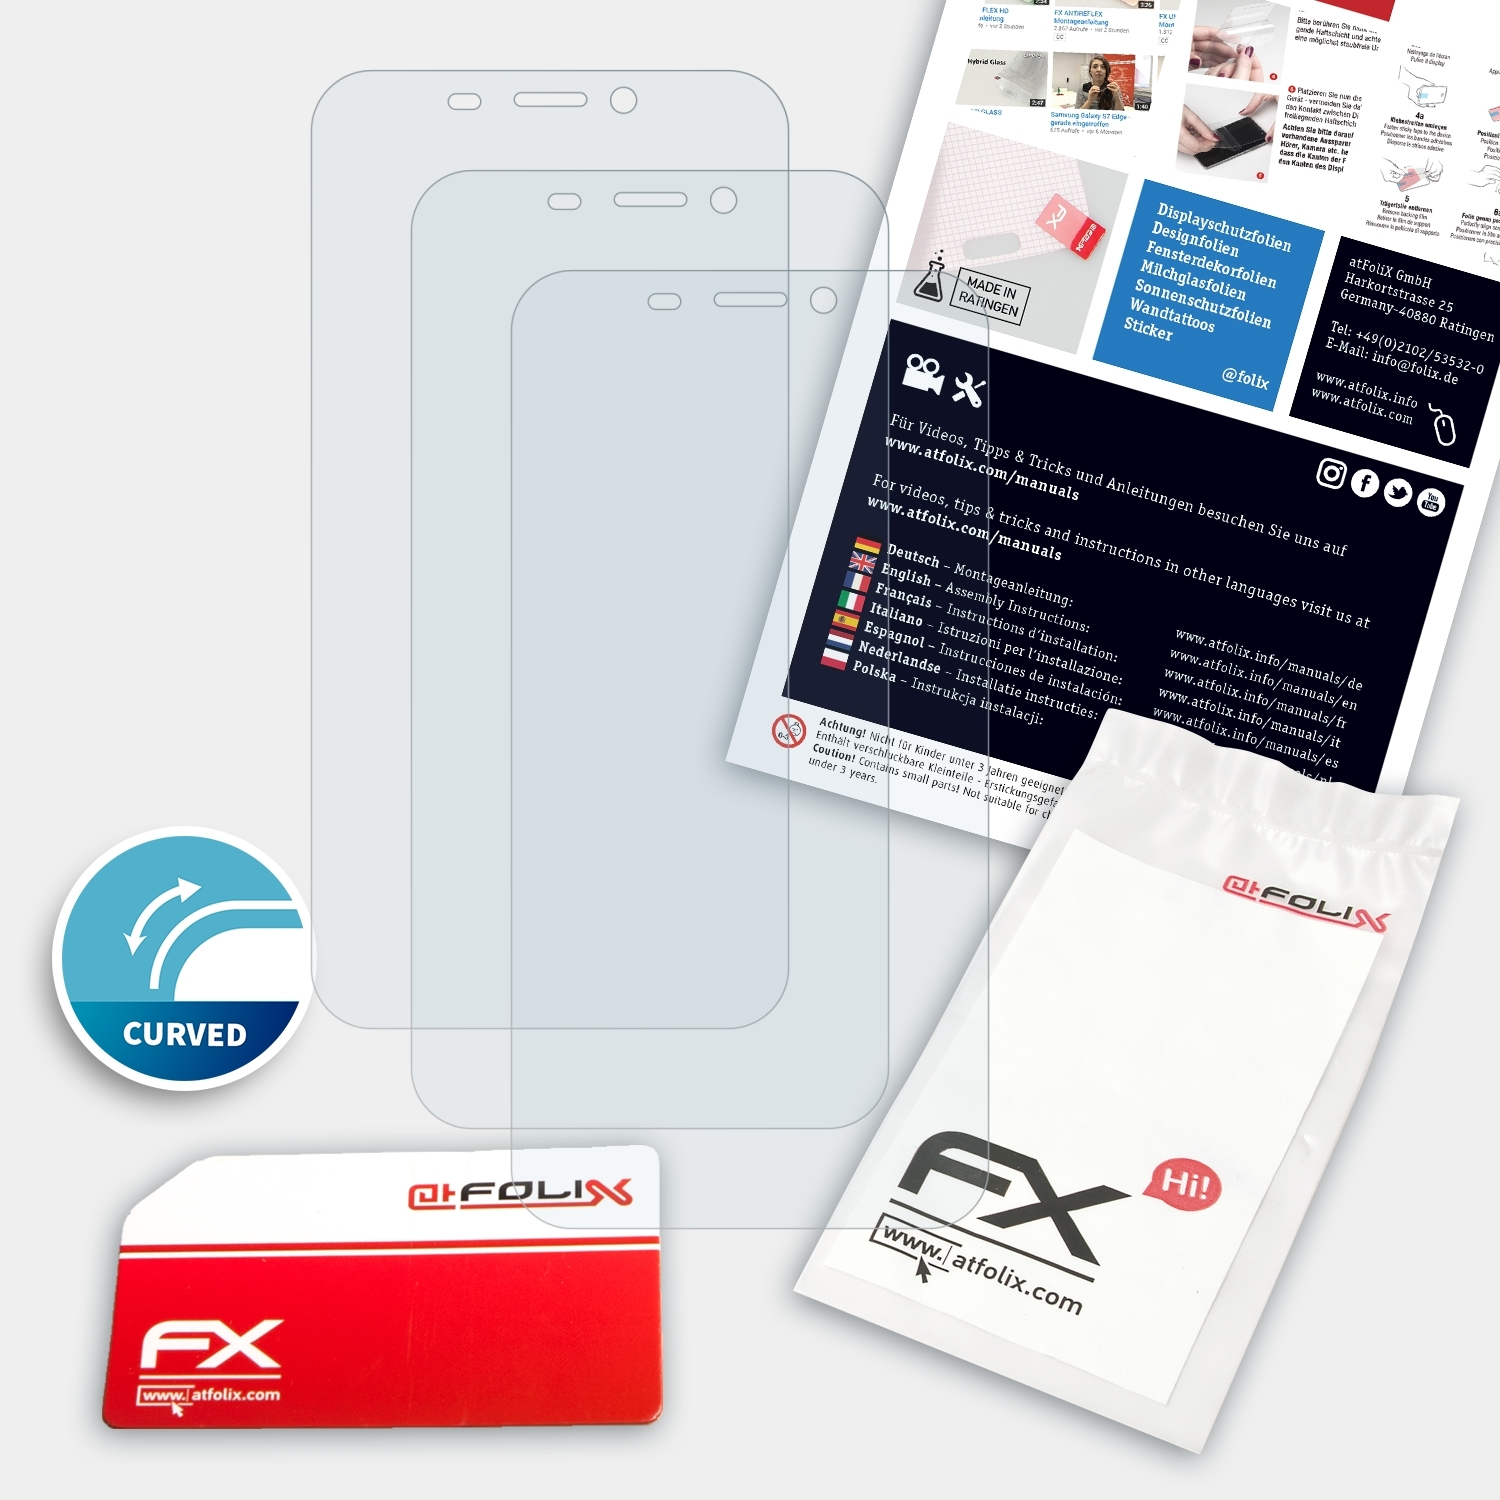 FX-ActiFleX Displayschutz(für 3x Doopro ATFOLIX Pro) P2